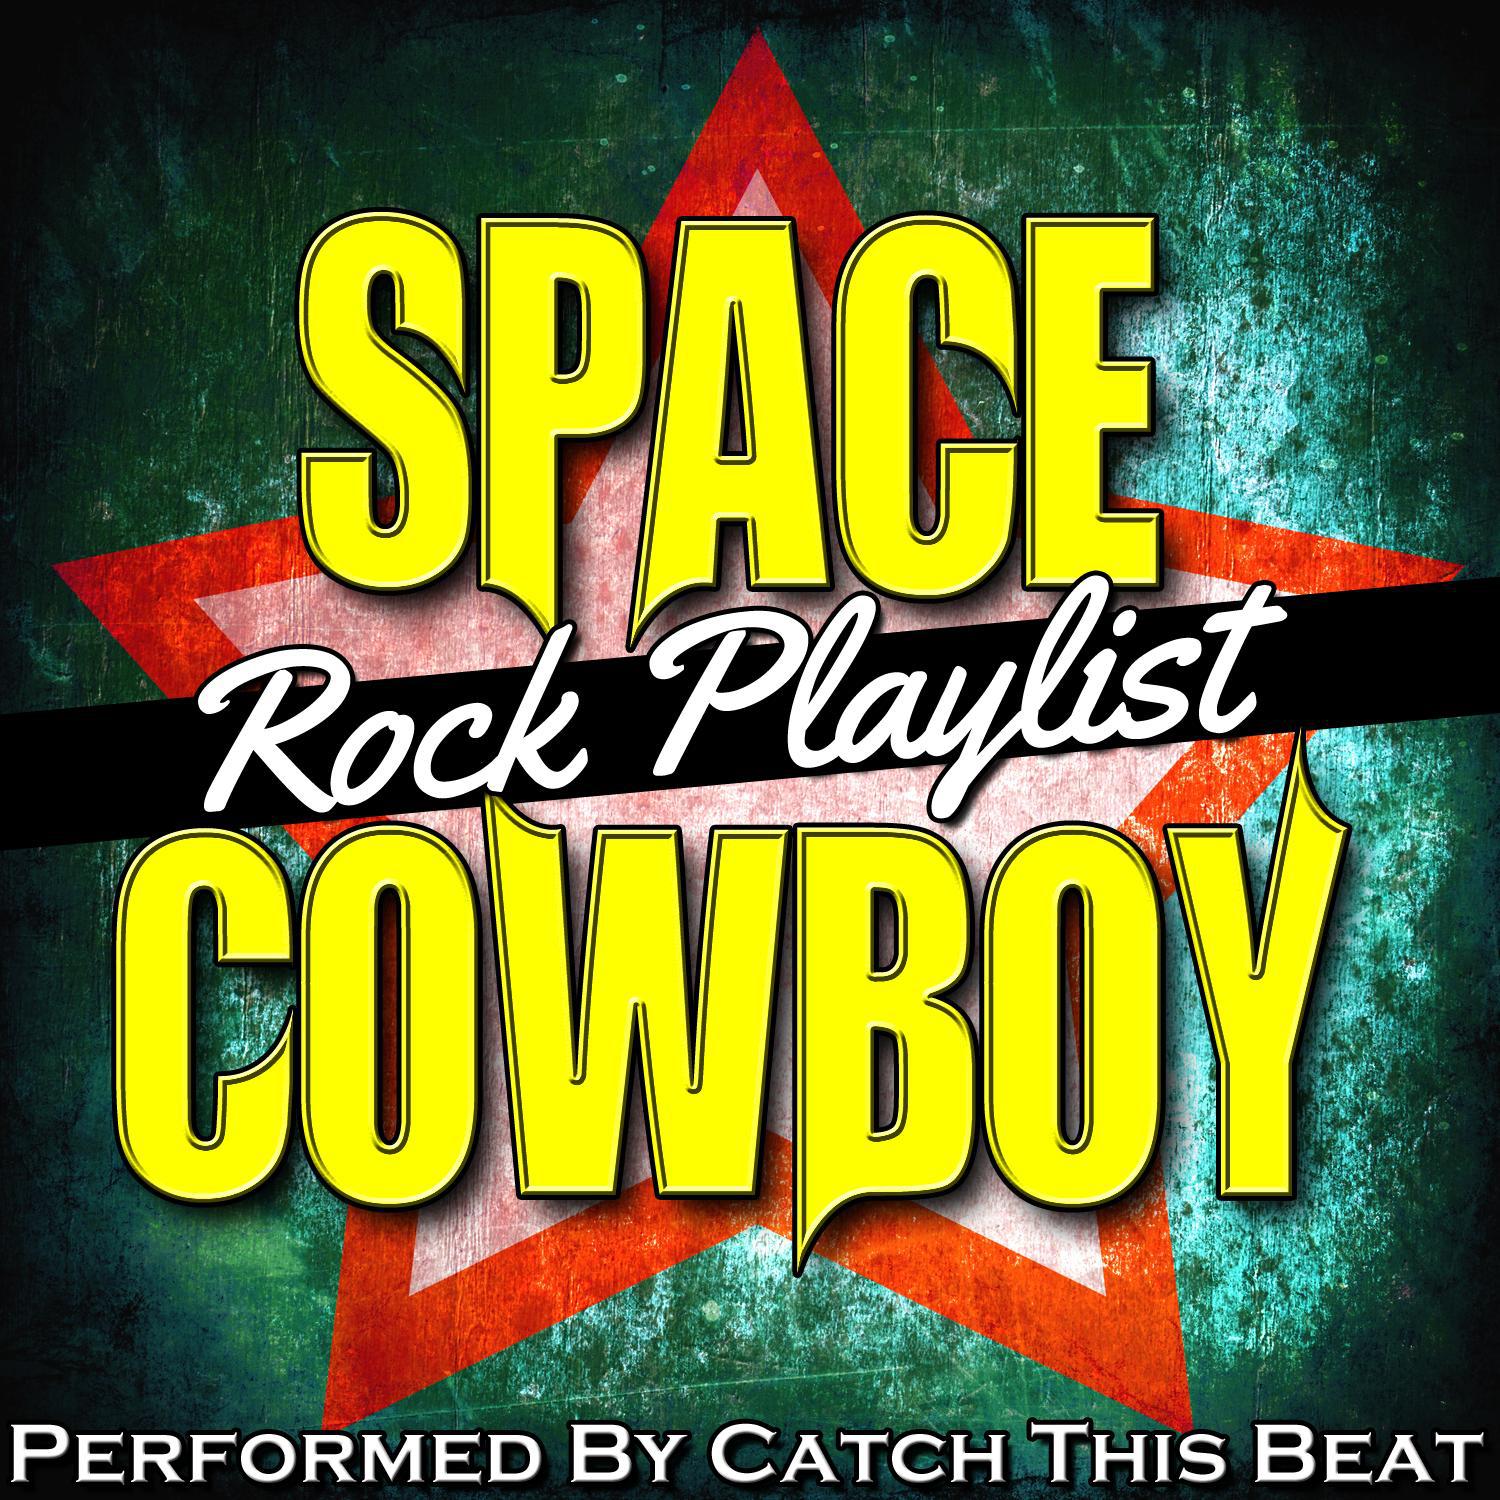 Space Cowboy: Rock Playlist